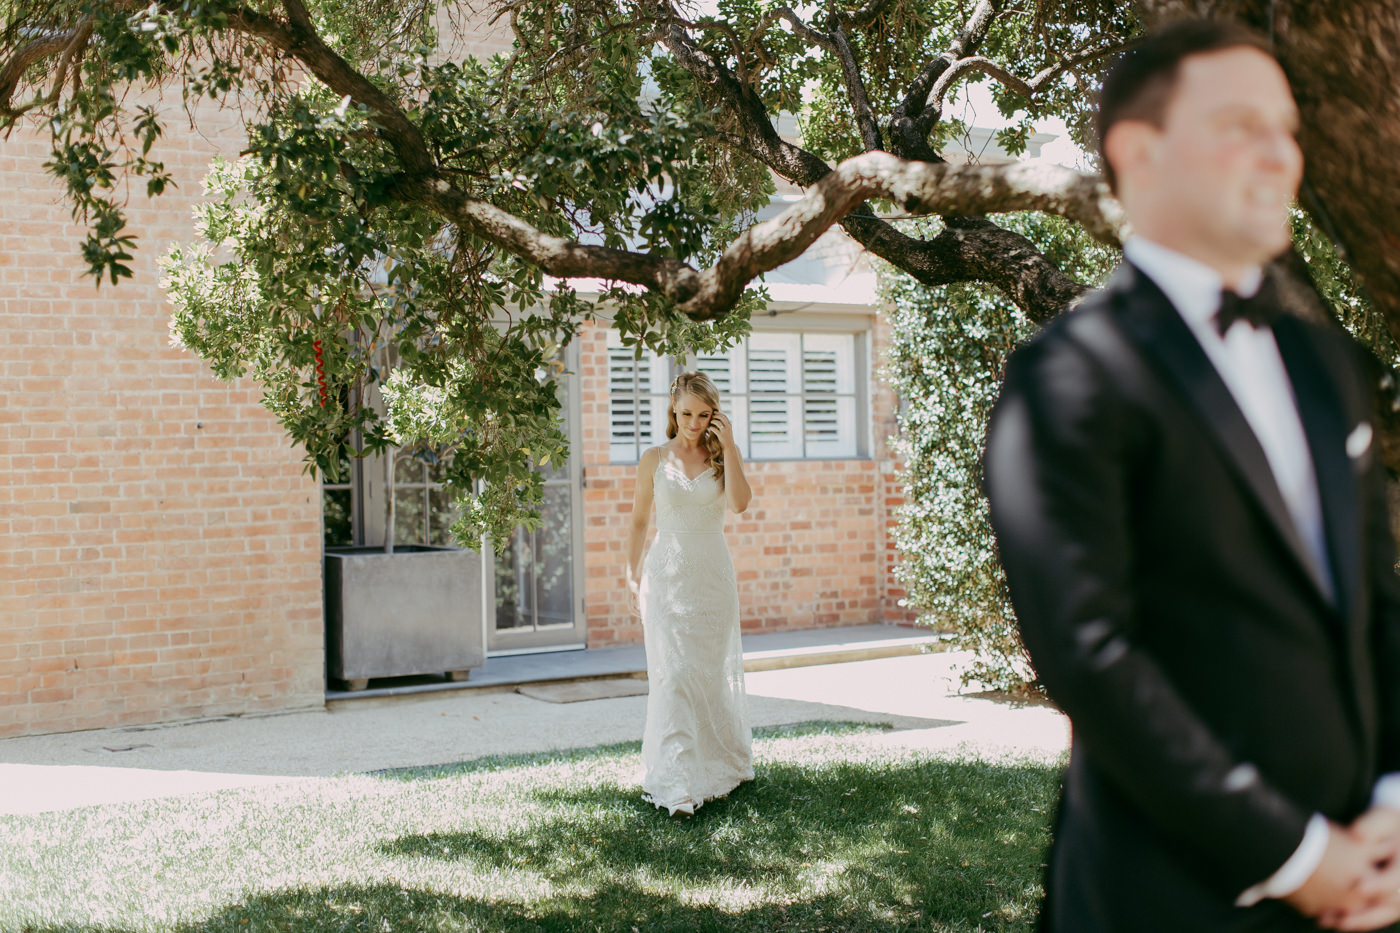 Anthony & Eliet - Wagga Wagga Wedding - Country NSW - Samantha Heather Photography-34.jpg